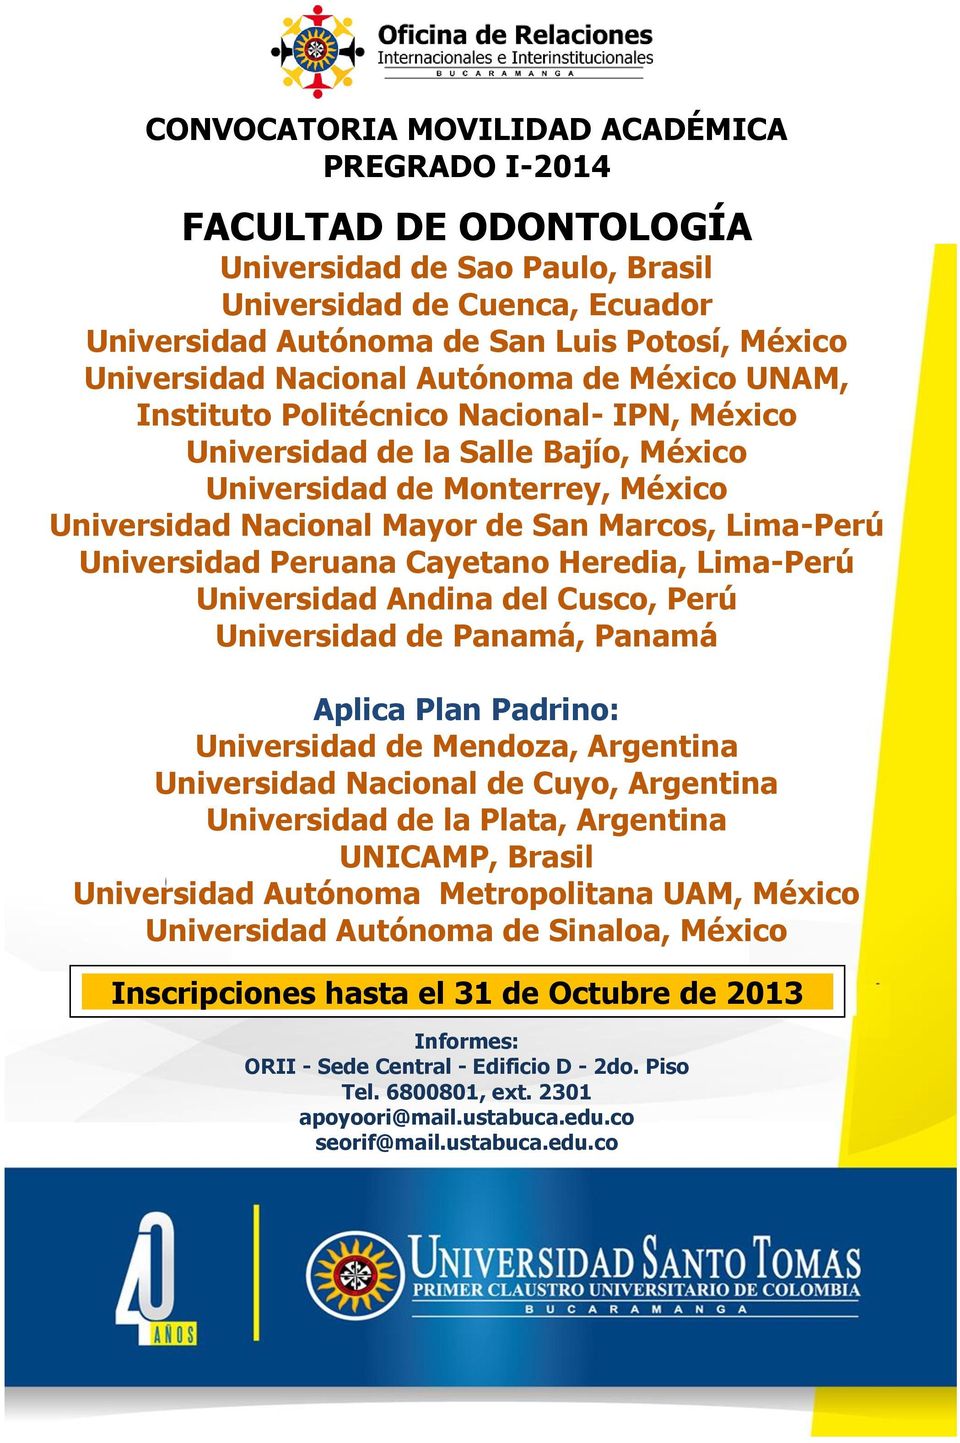 Nacional Mayor de San Marcos, Lima-Perú Universidad Peruana Cayetano Heredia, Lima-Perú Universidad Andina del Cusco, Perú Universidad de